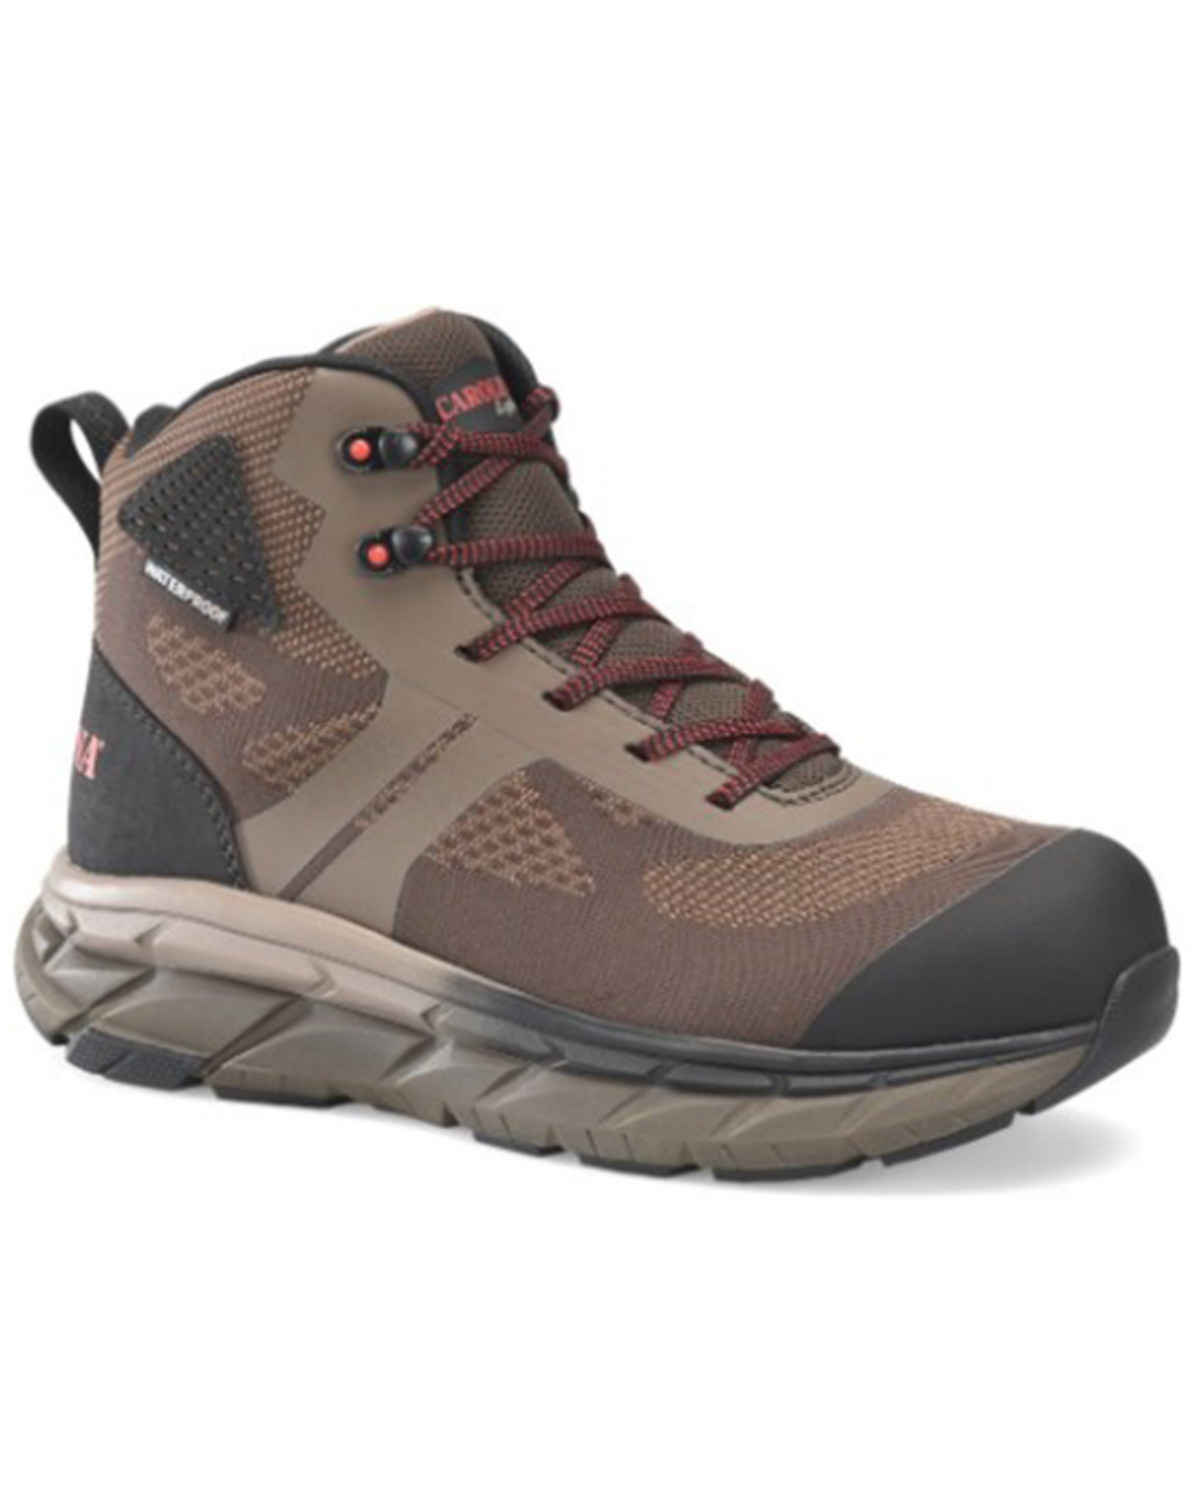 Carolina Men's Align Vortrex Waterproof Hi Athletic Hiking Boot - Composite Toe